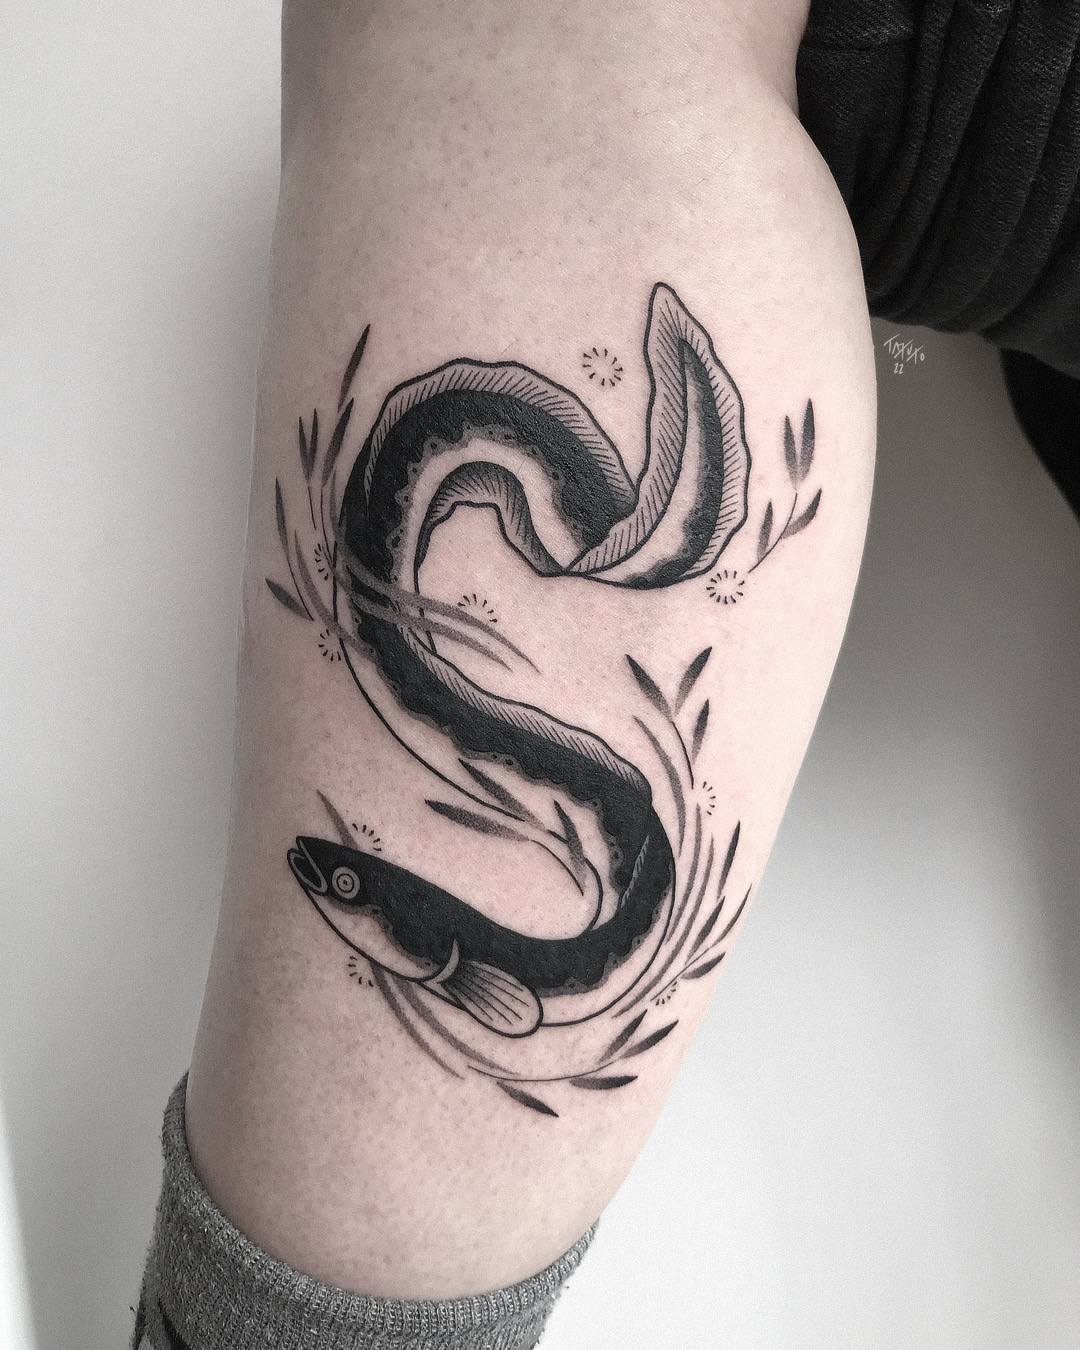 nico-tatuto-tattoo-bordeaux-flash-bastide-tatoueur-anguille-eel-vegetal-japonais-japanese-black-fineline-floral-botanical-meilleur